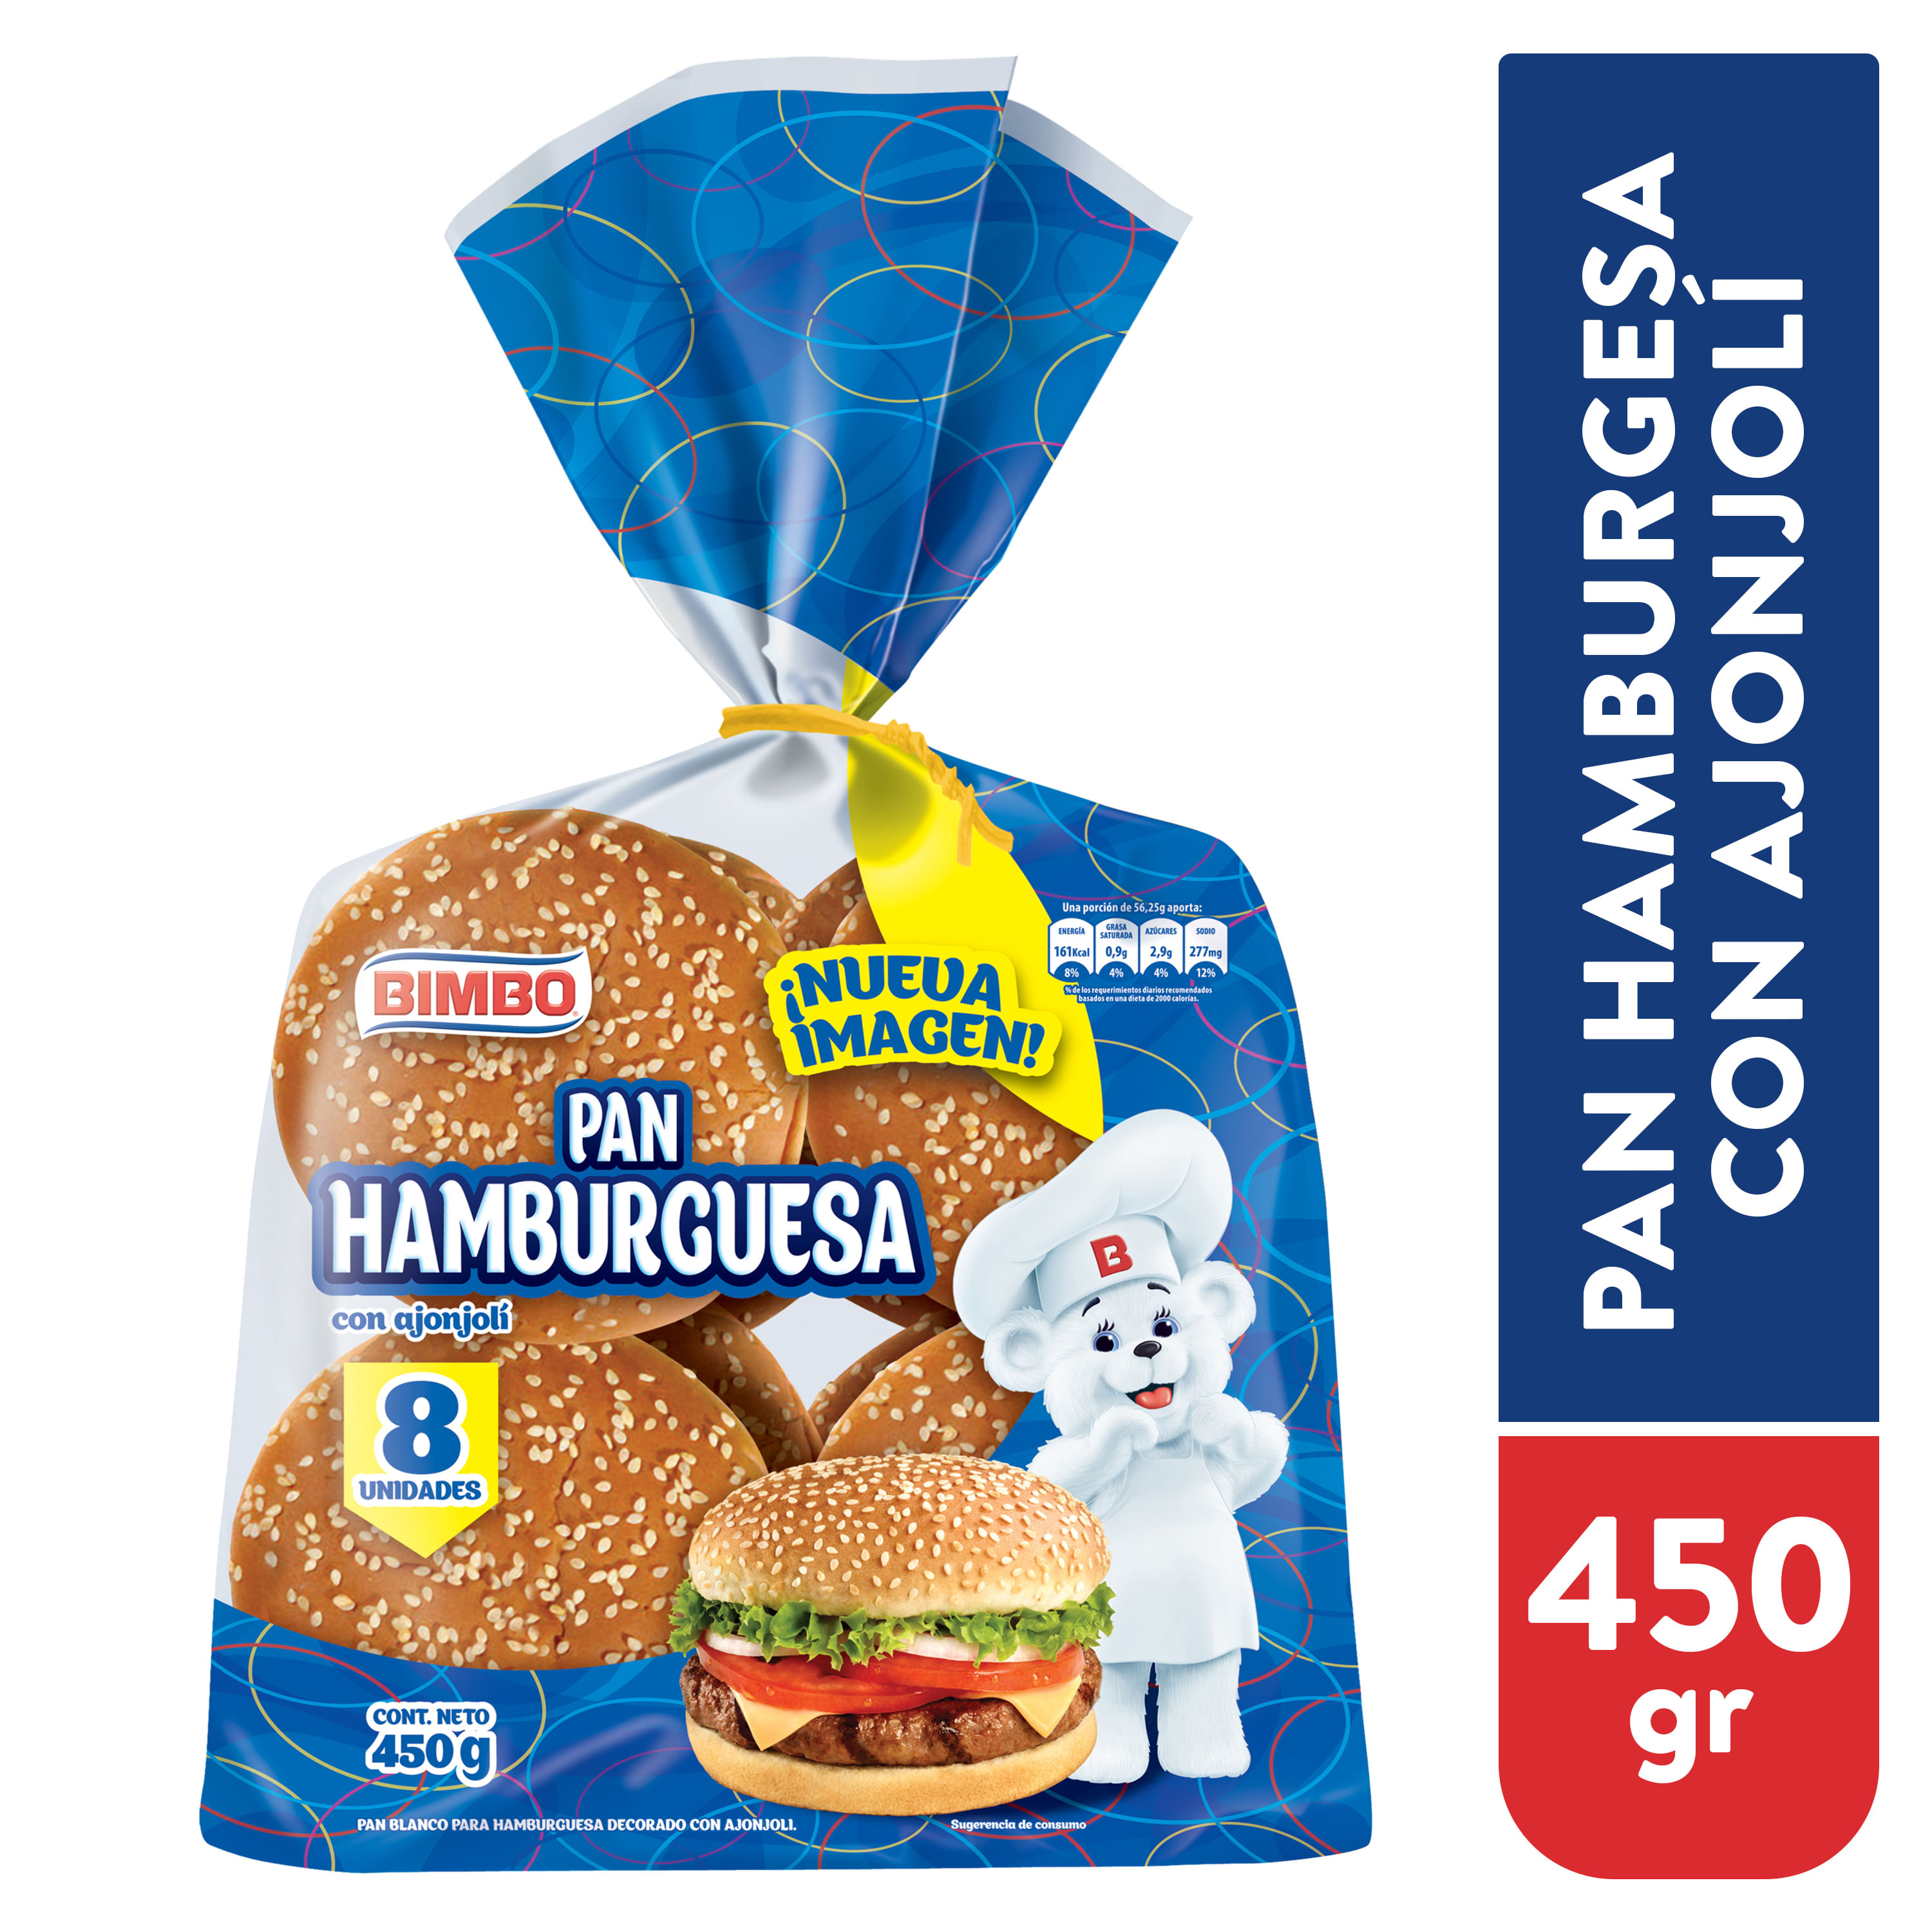 Comprar Pan Bimbo Sandwich Blanco Mediano - 450gr, Walmart Costa Rica -  Maxi Palí